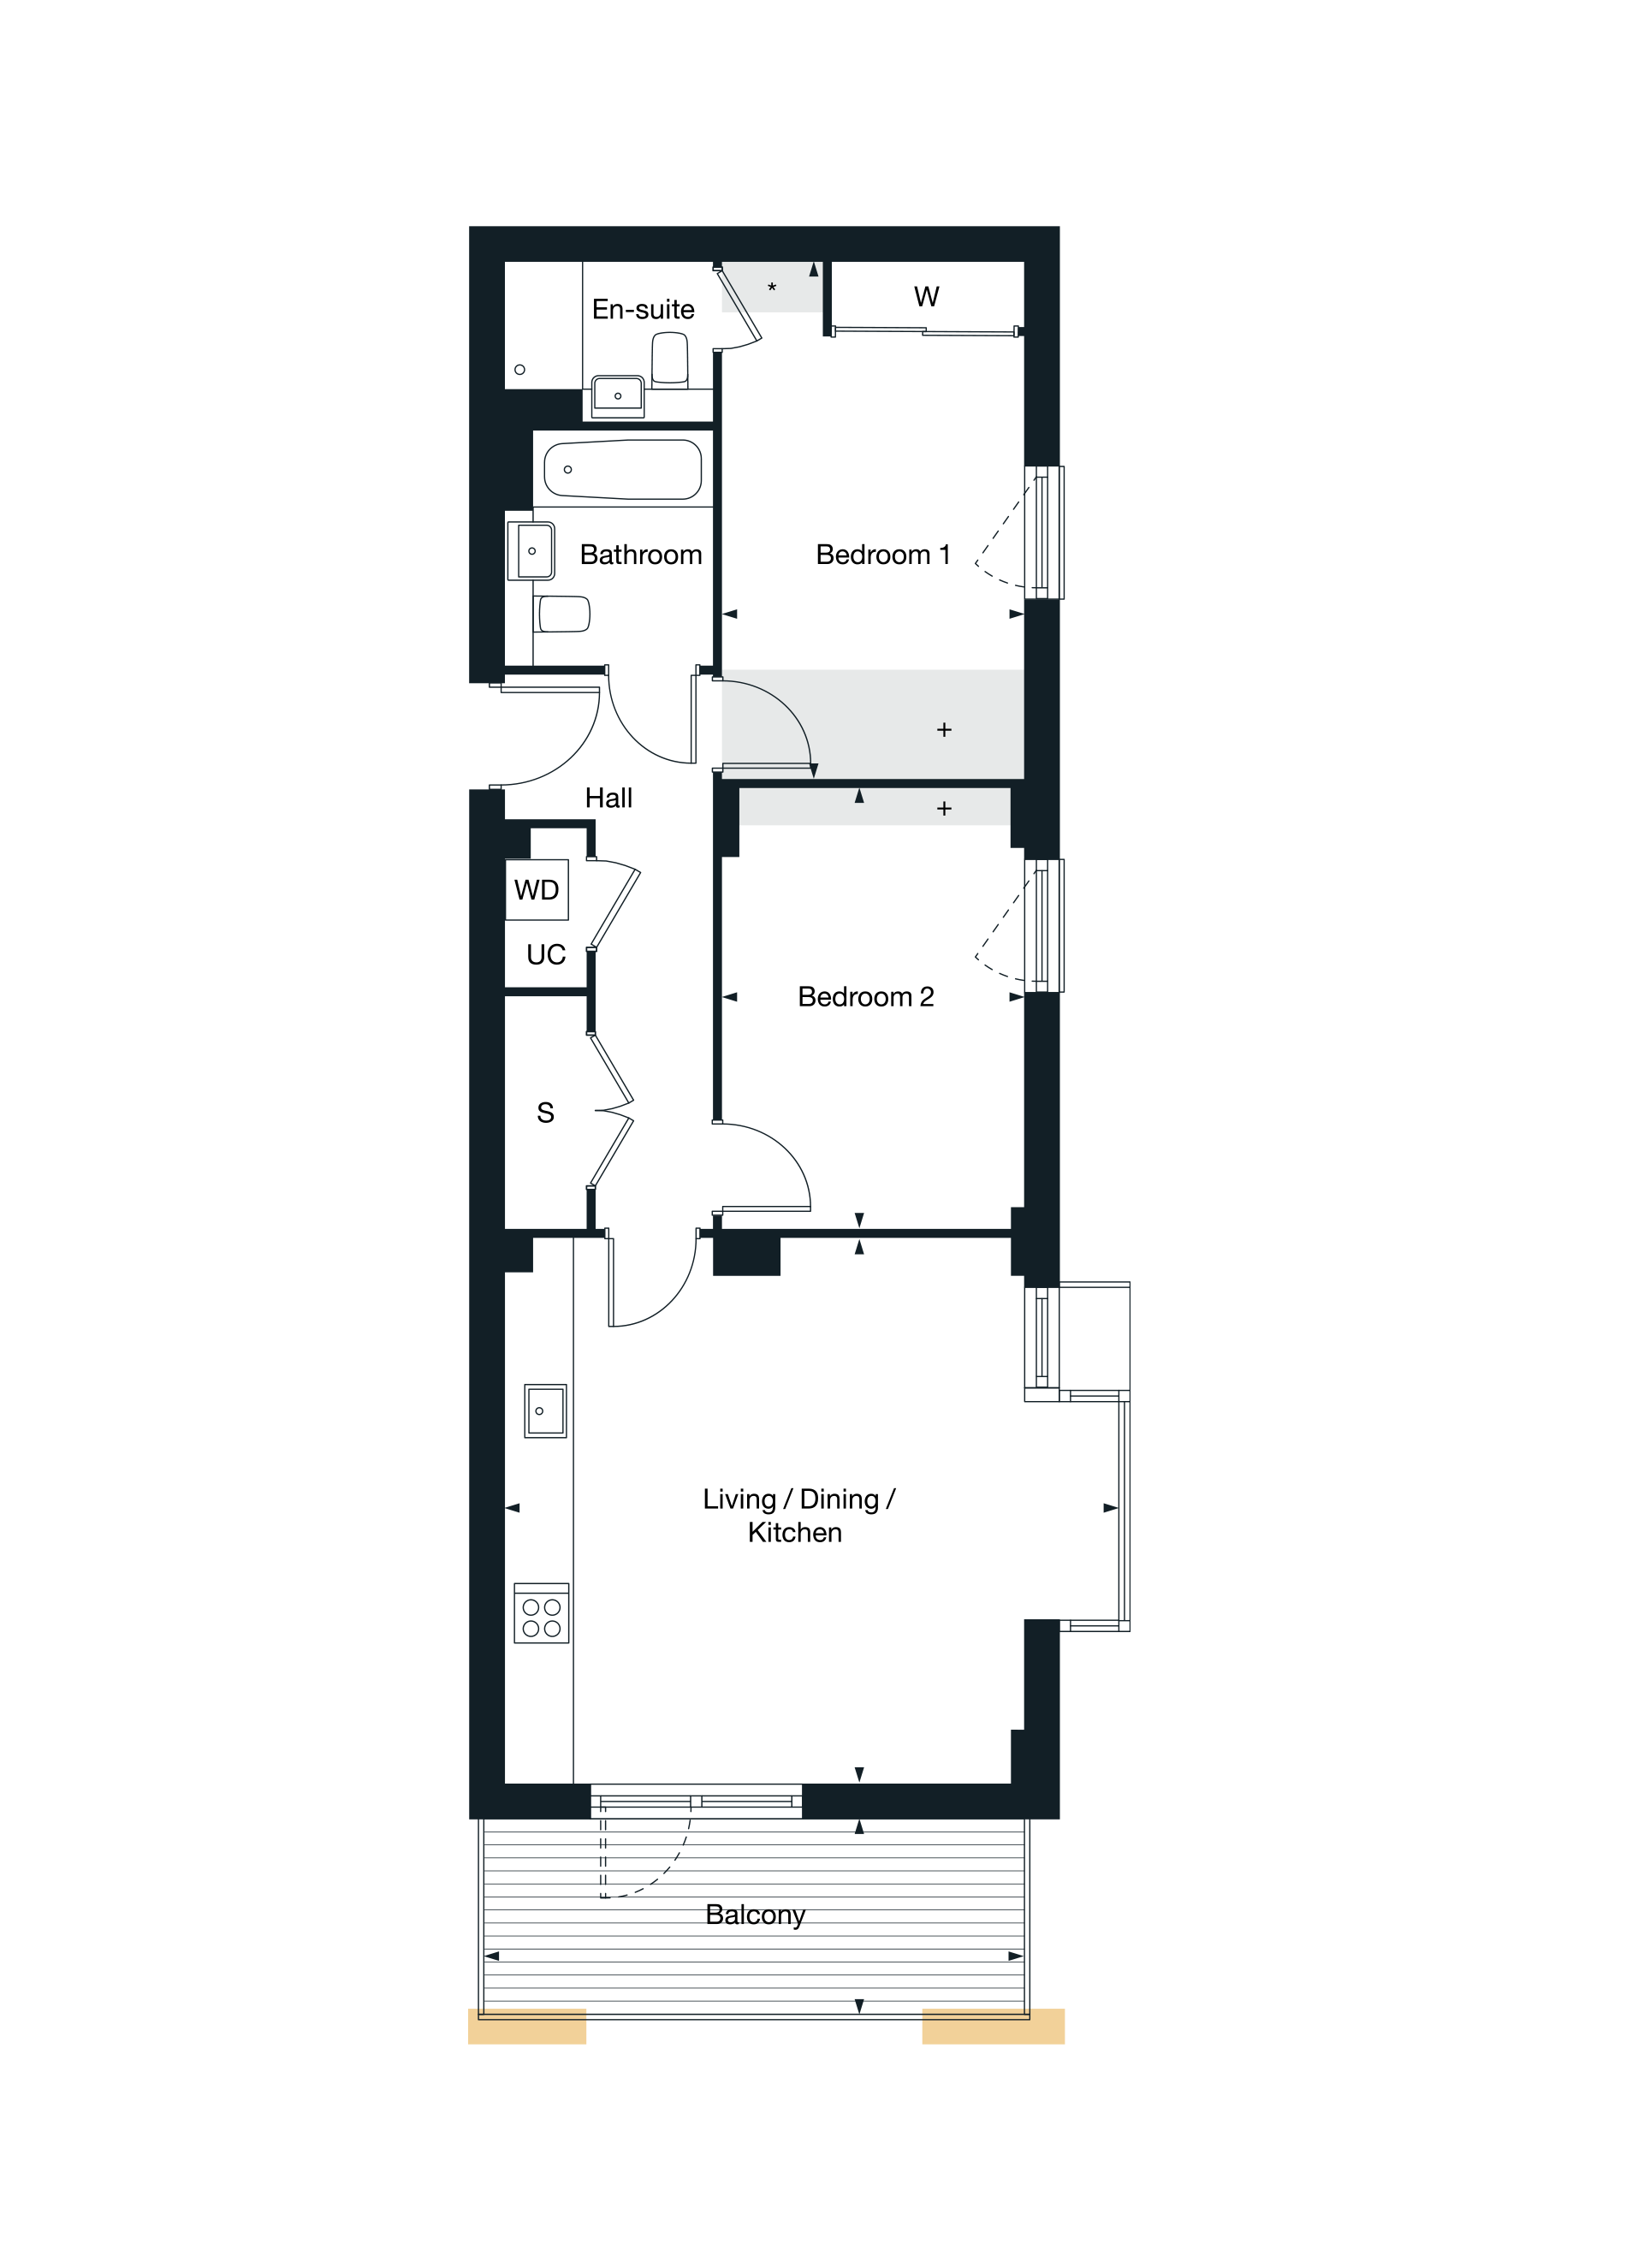 Floor 01 - Plot B1.06 floorplan